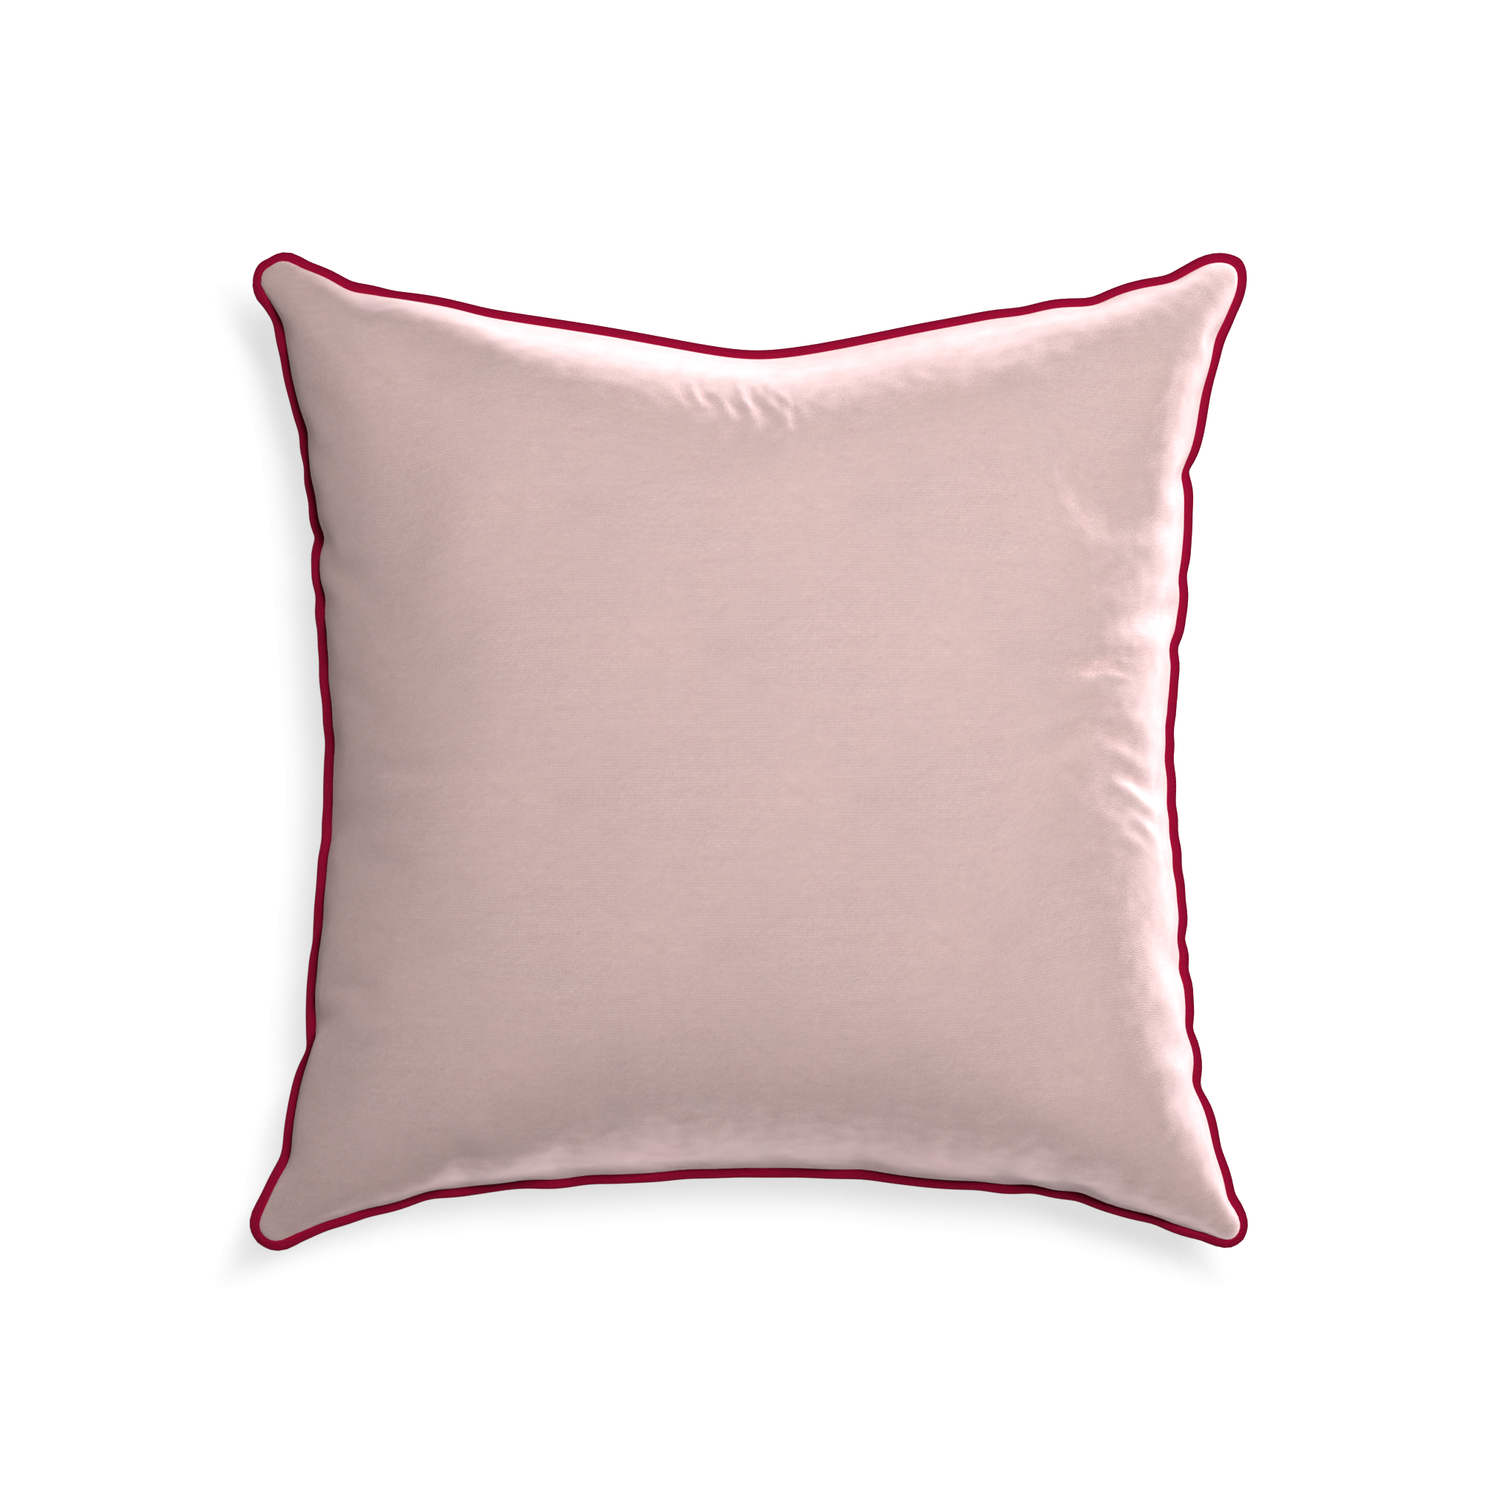 22-square rose velvet custom pillow with raspberry piping on white background